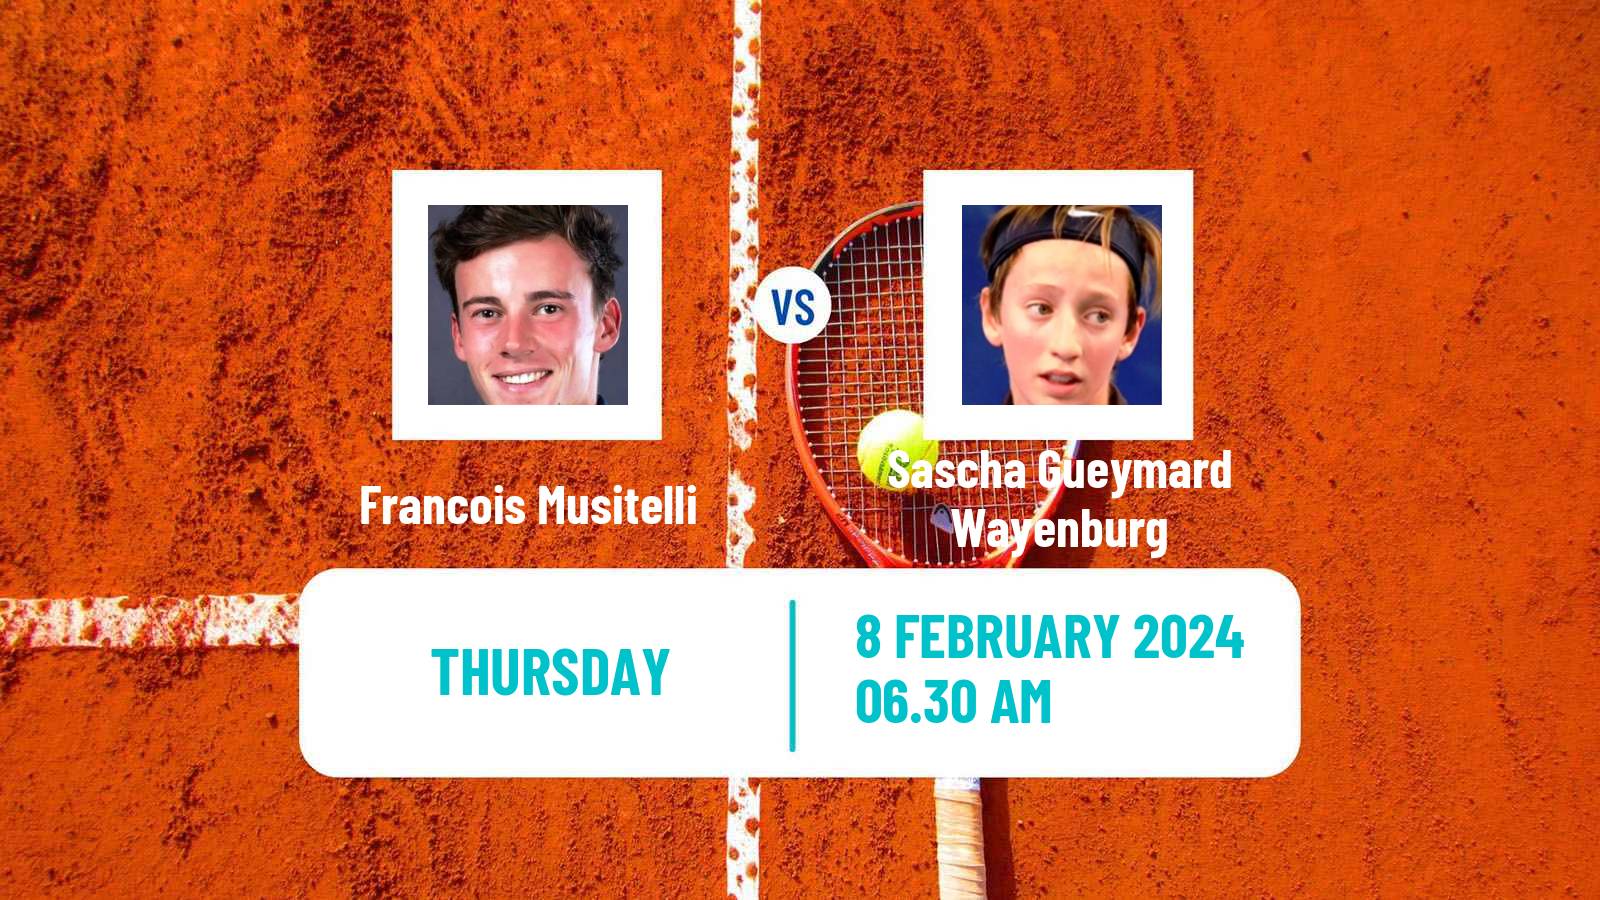 Tennis ITF M15 Grenoble Men Francois Musitelli - Sascha Gueymard Wayenburg